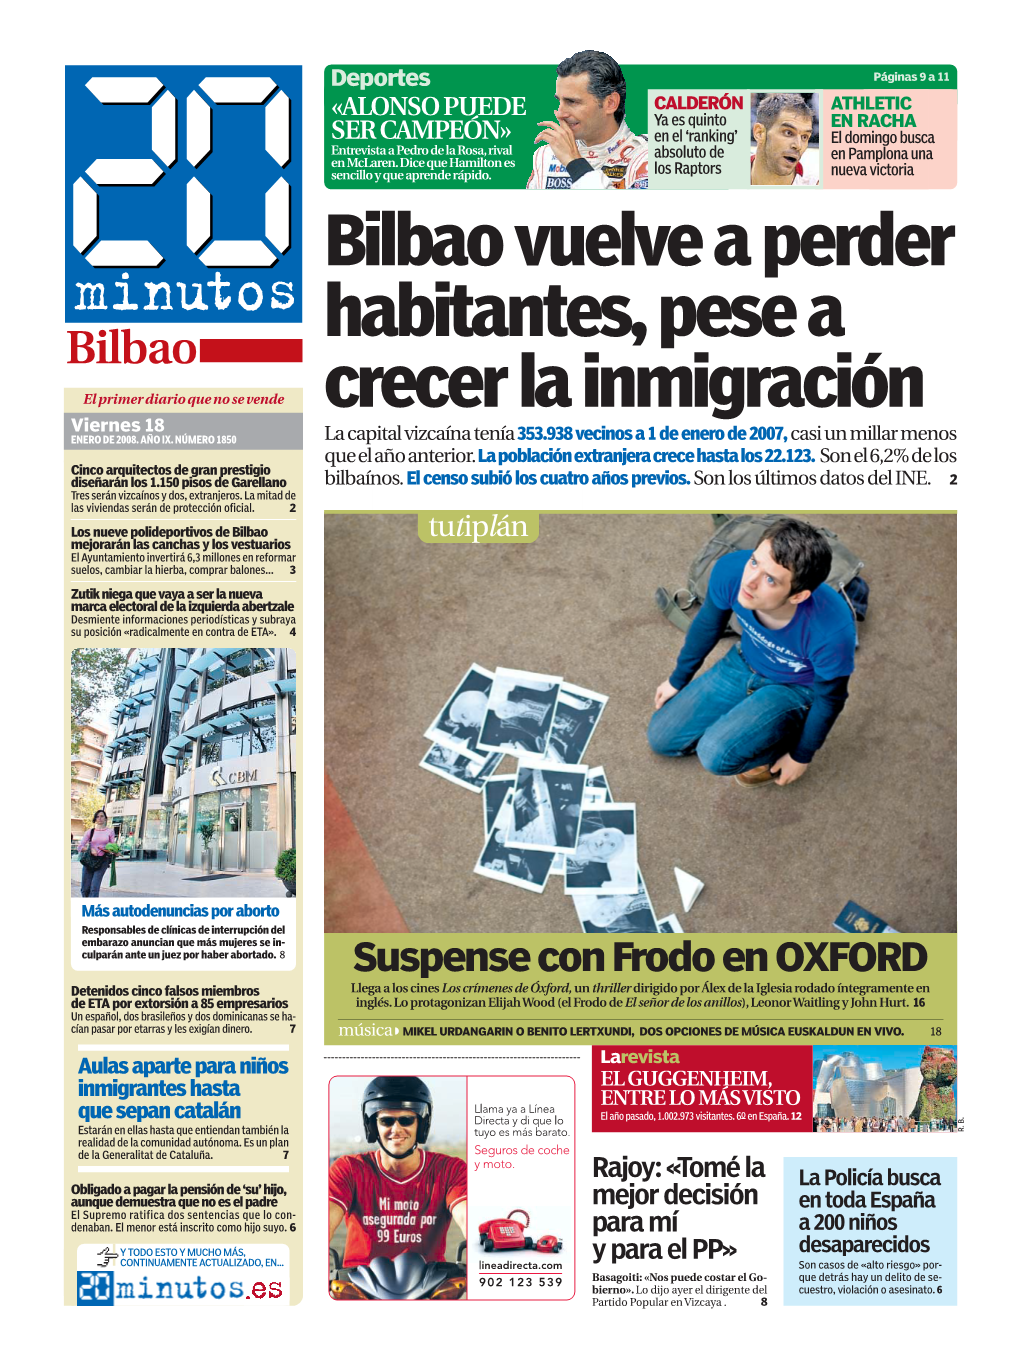 Bilbao Vuelve a Perder Habitantes, Pese a Crecer La Inmigración